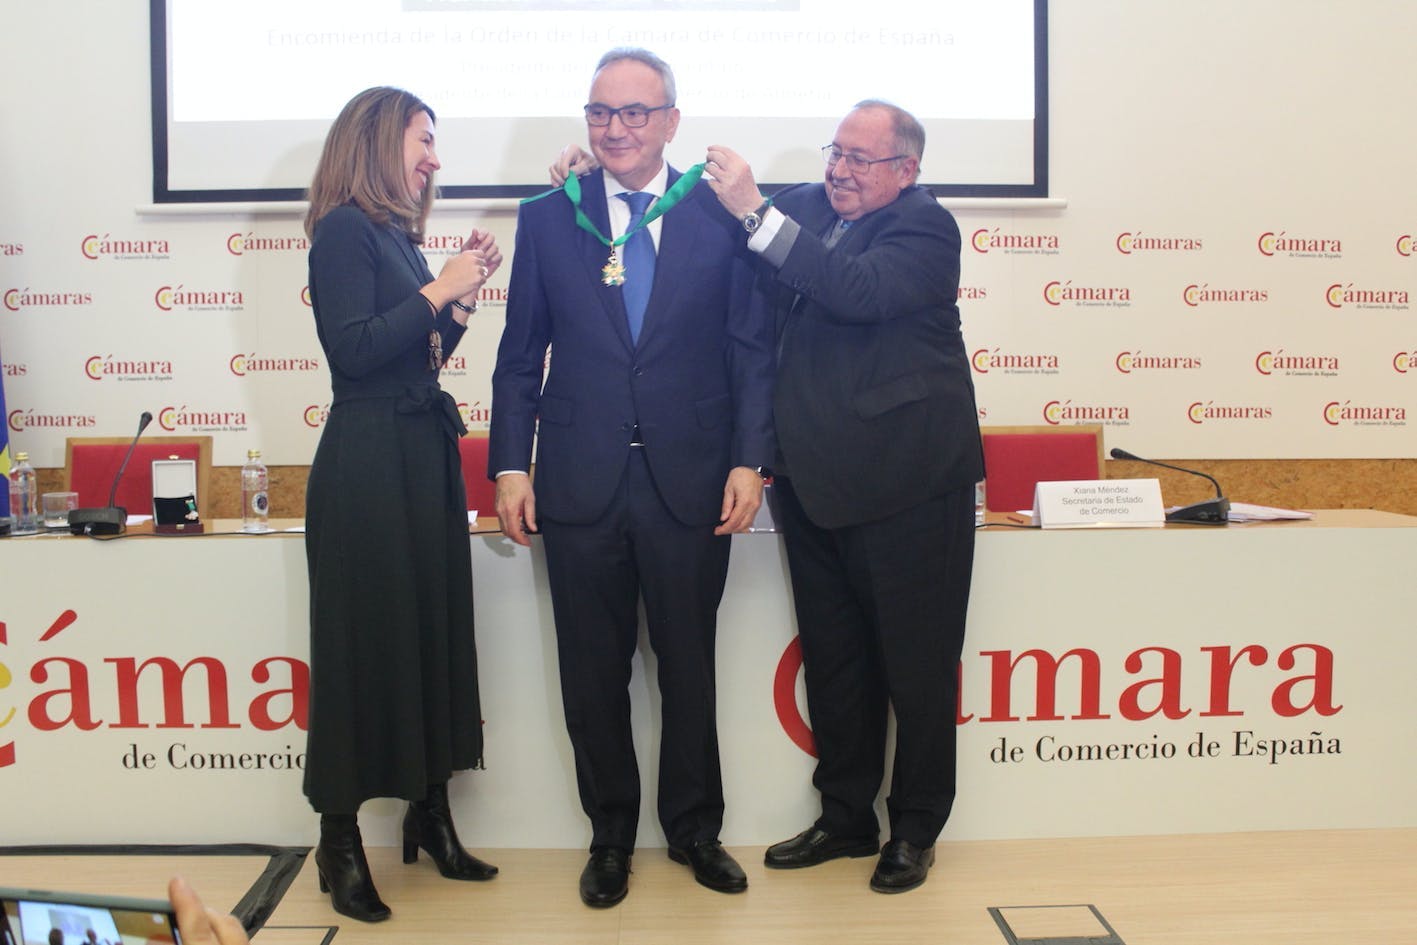 Image 33 of Entrega Encomienda Francisco Cosentino 1 in Cosentino receives the Commendation of the Order of the Spanish Chamber - Cosentino